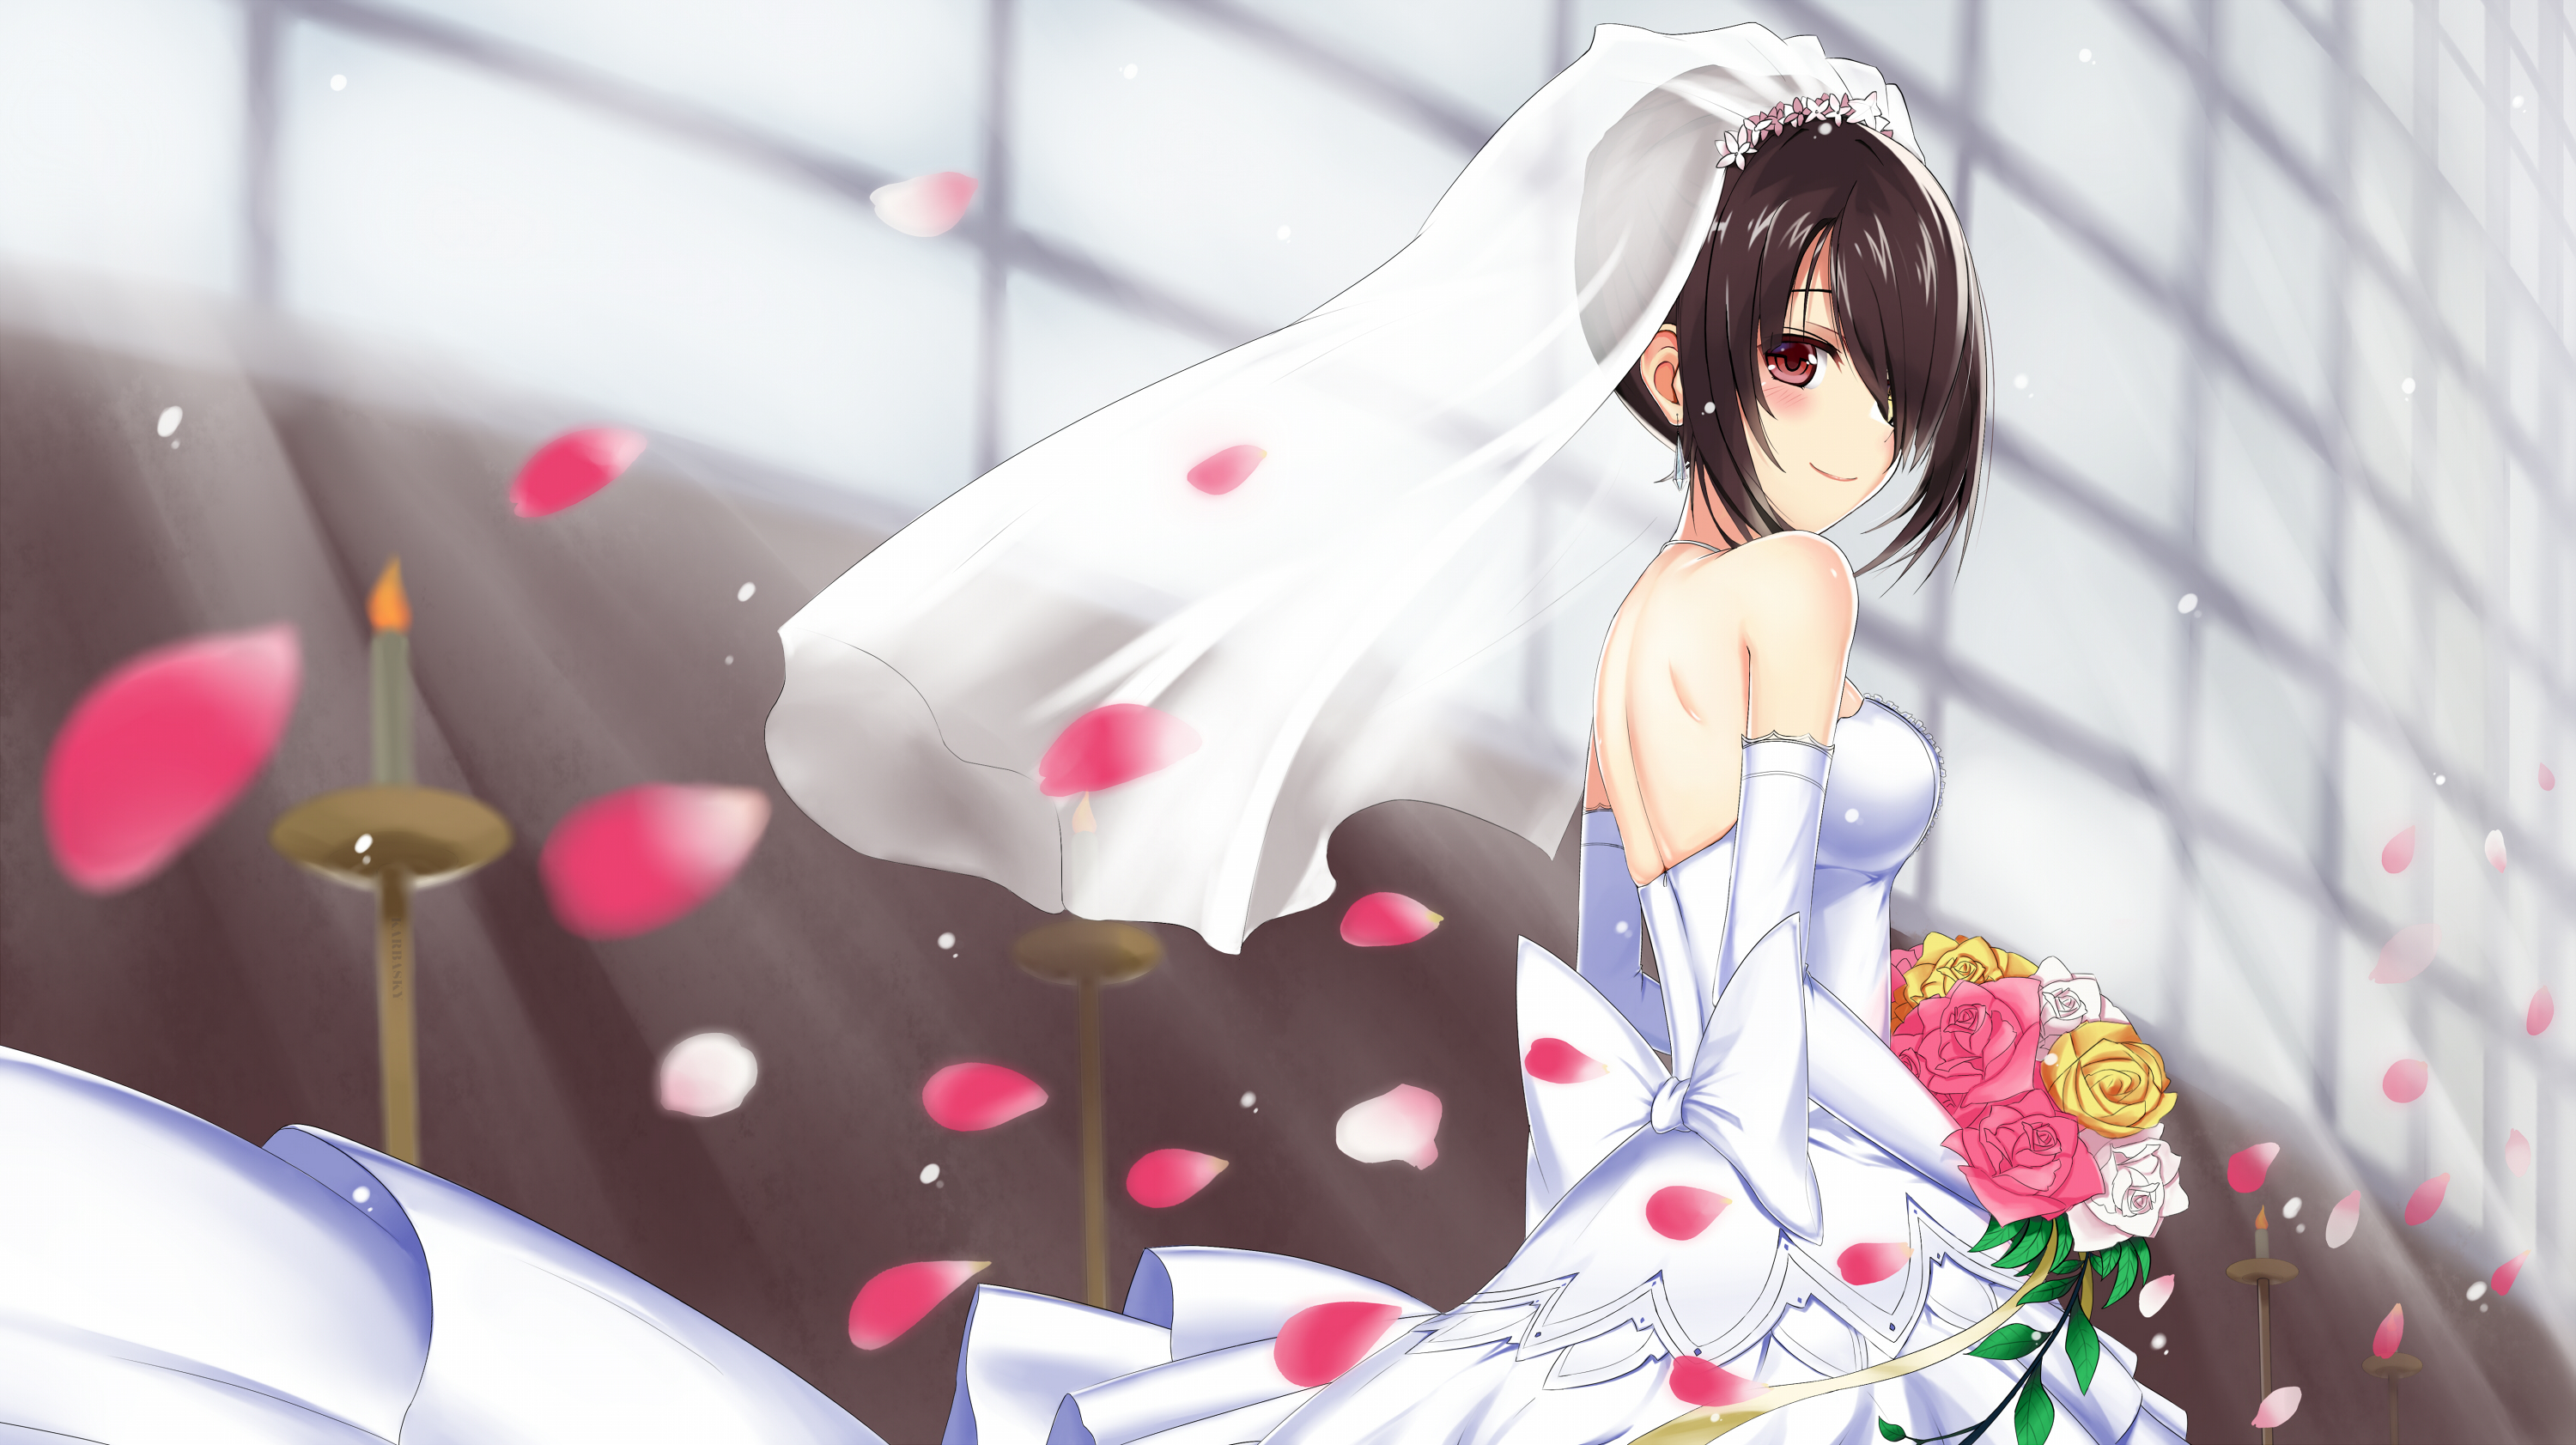 Anime Girls Anime Tokisaki Kurumi Date A Live Red Eyes Petals Flowers Wedding Dress 3000x1683